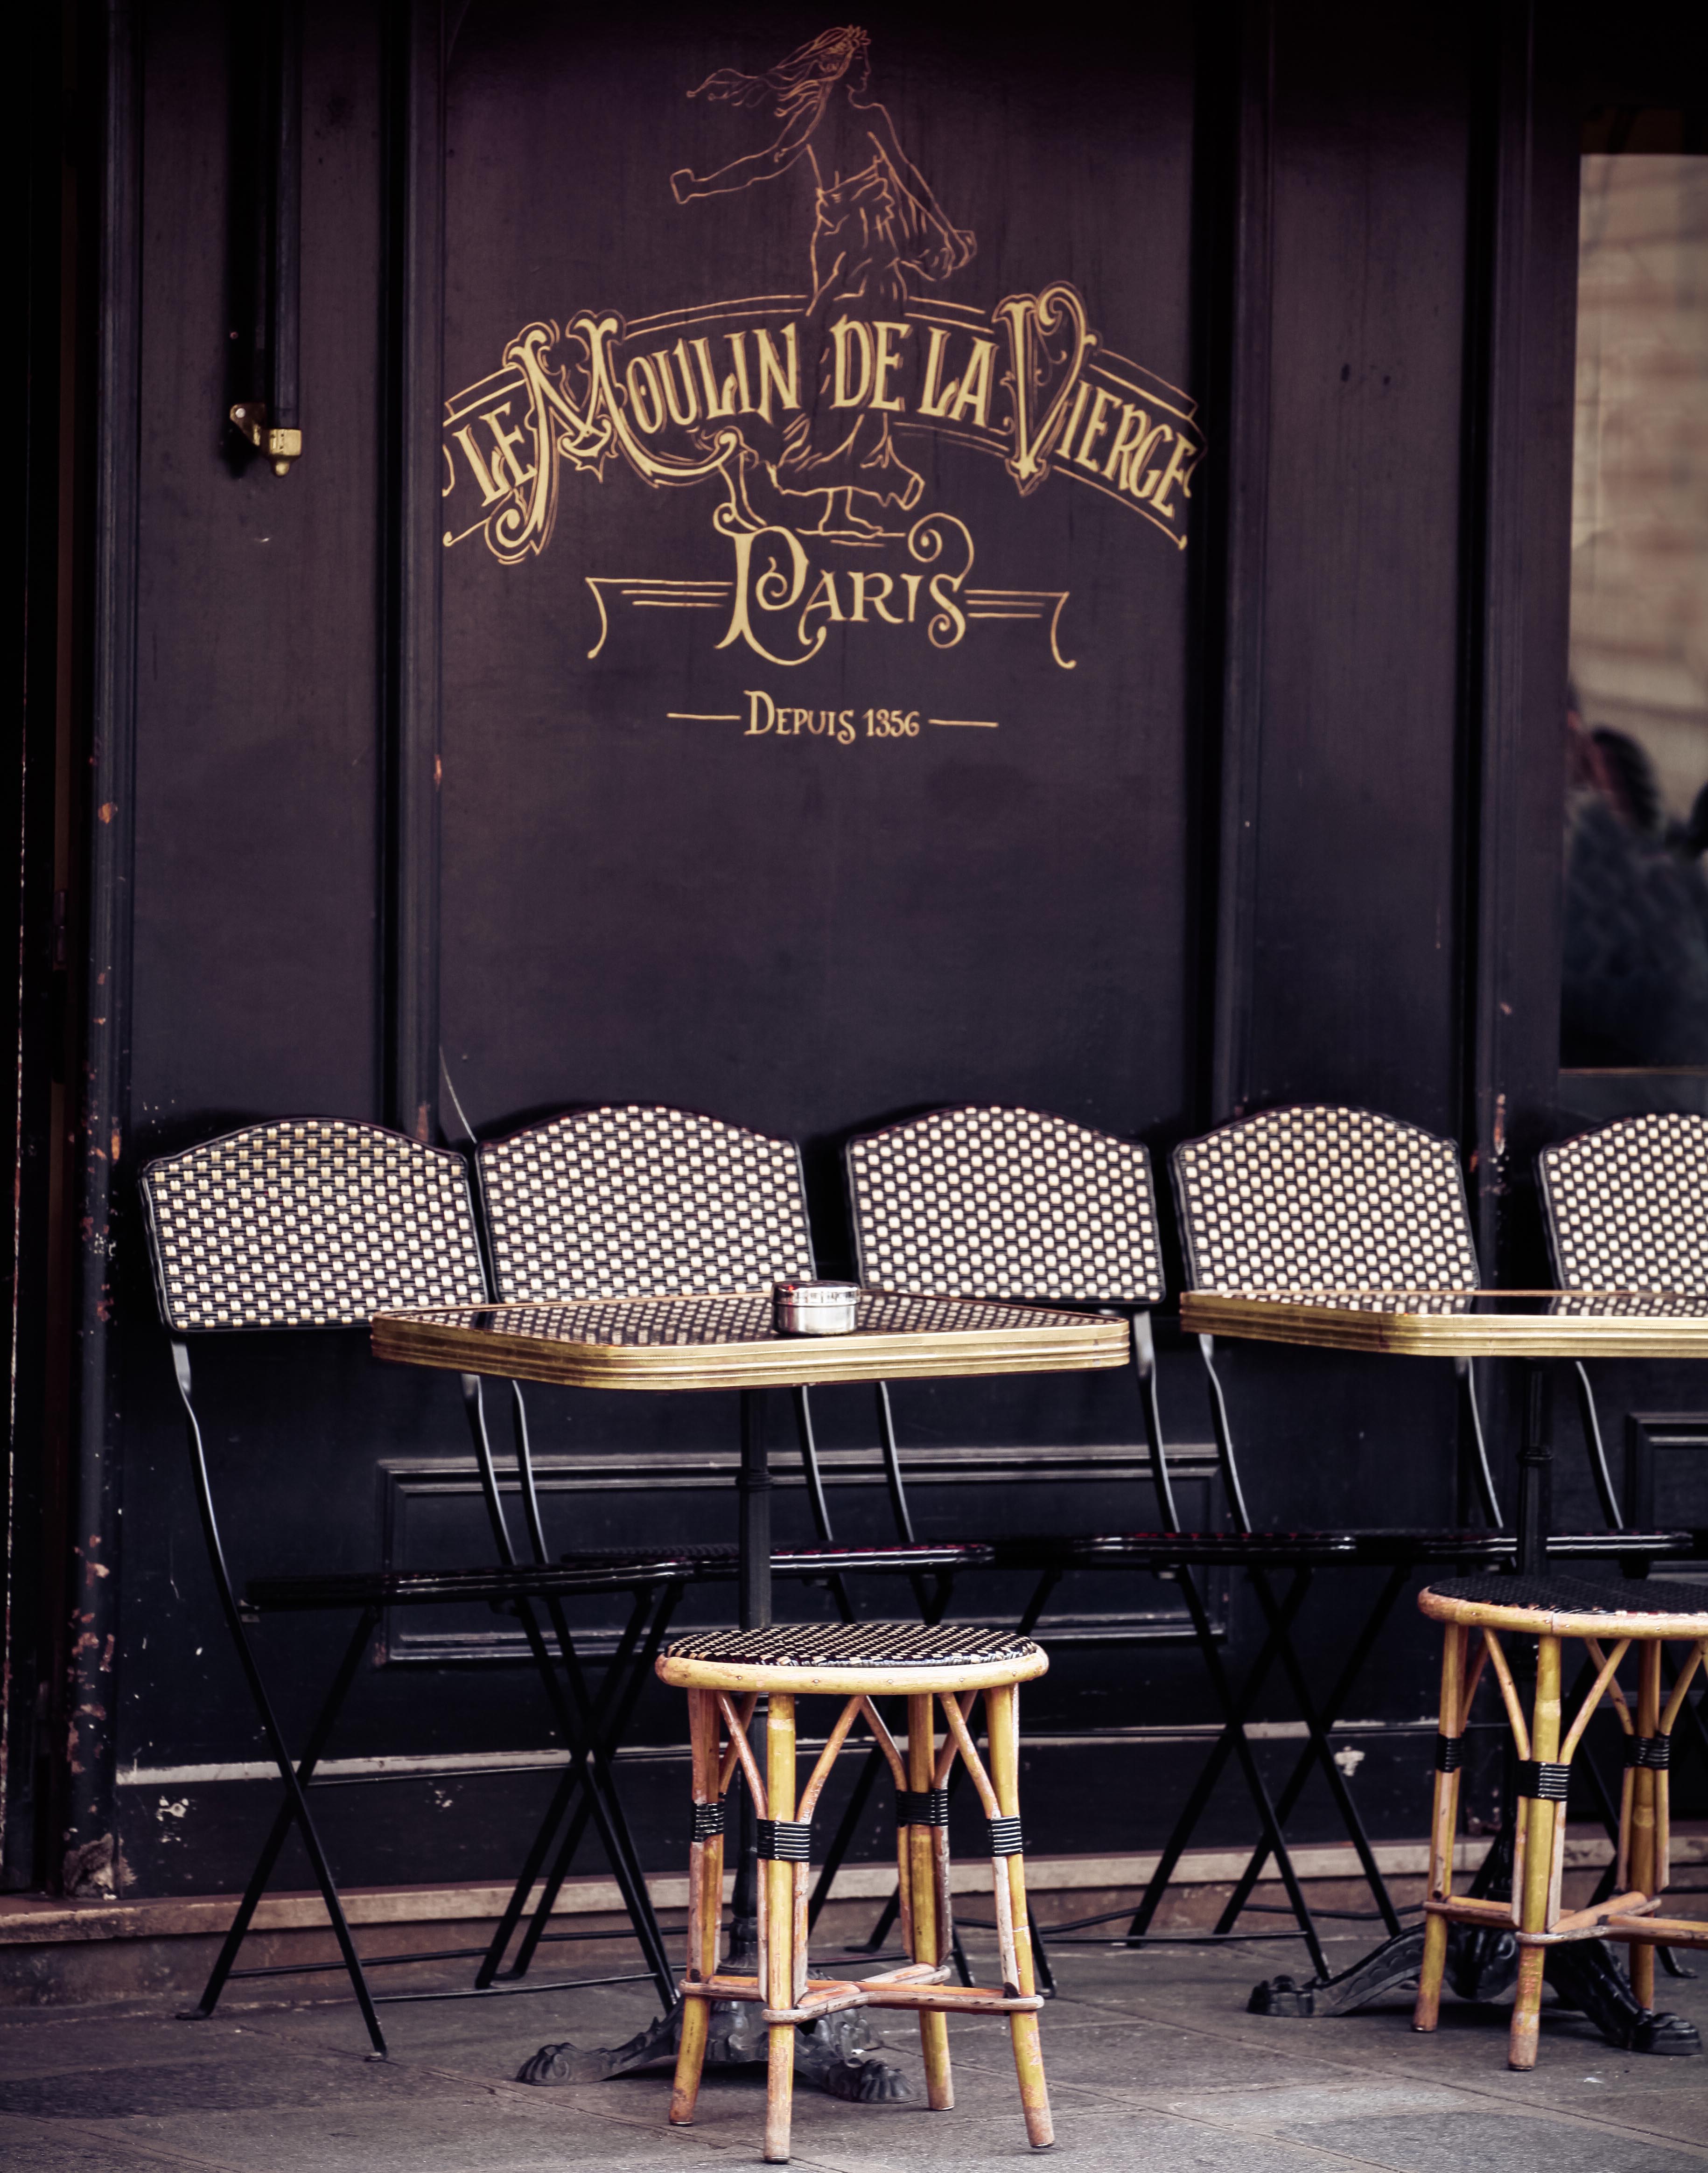 History of the “Moulin de la vierge” bakery